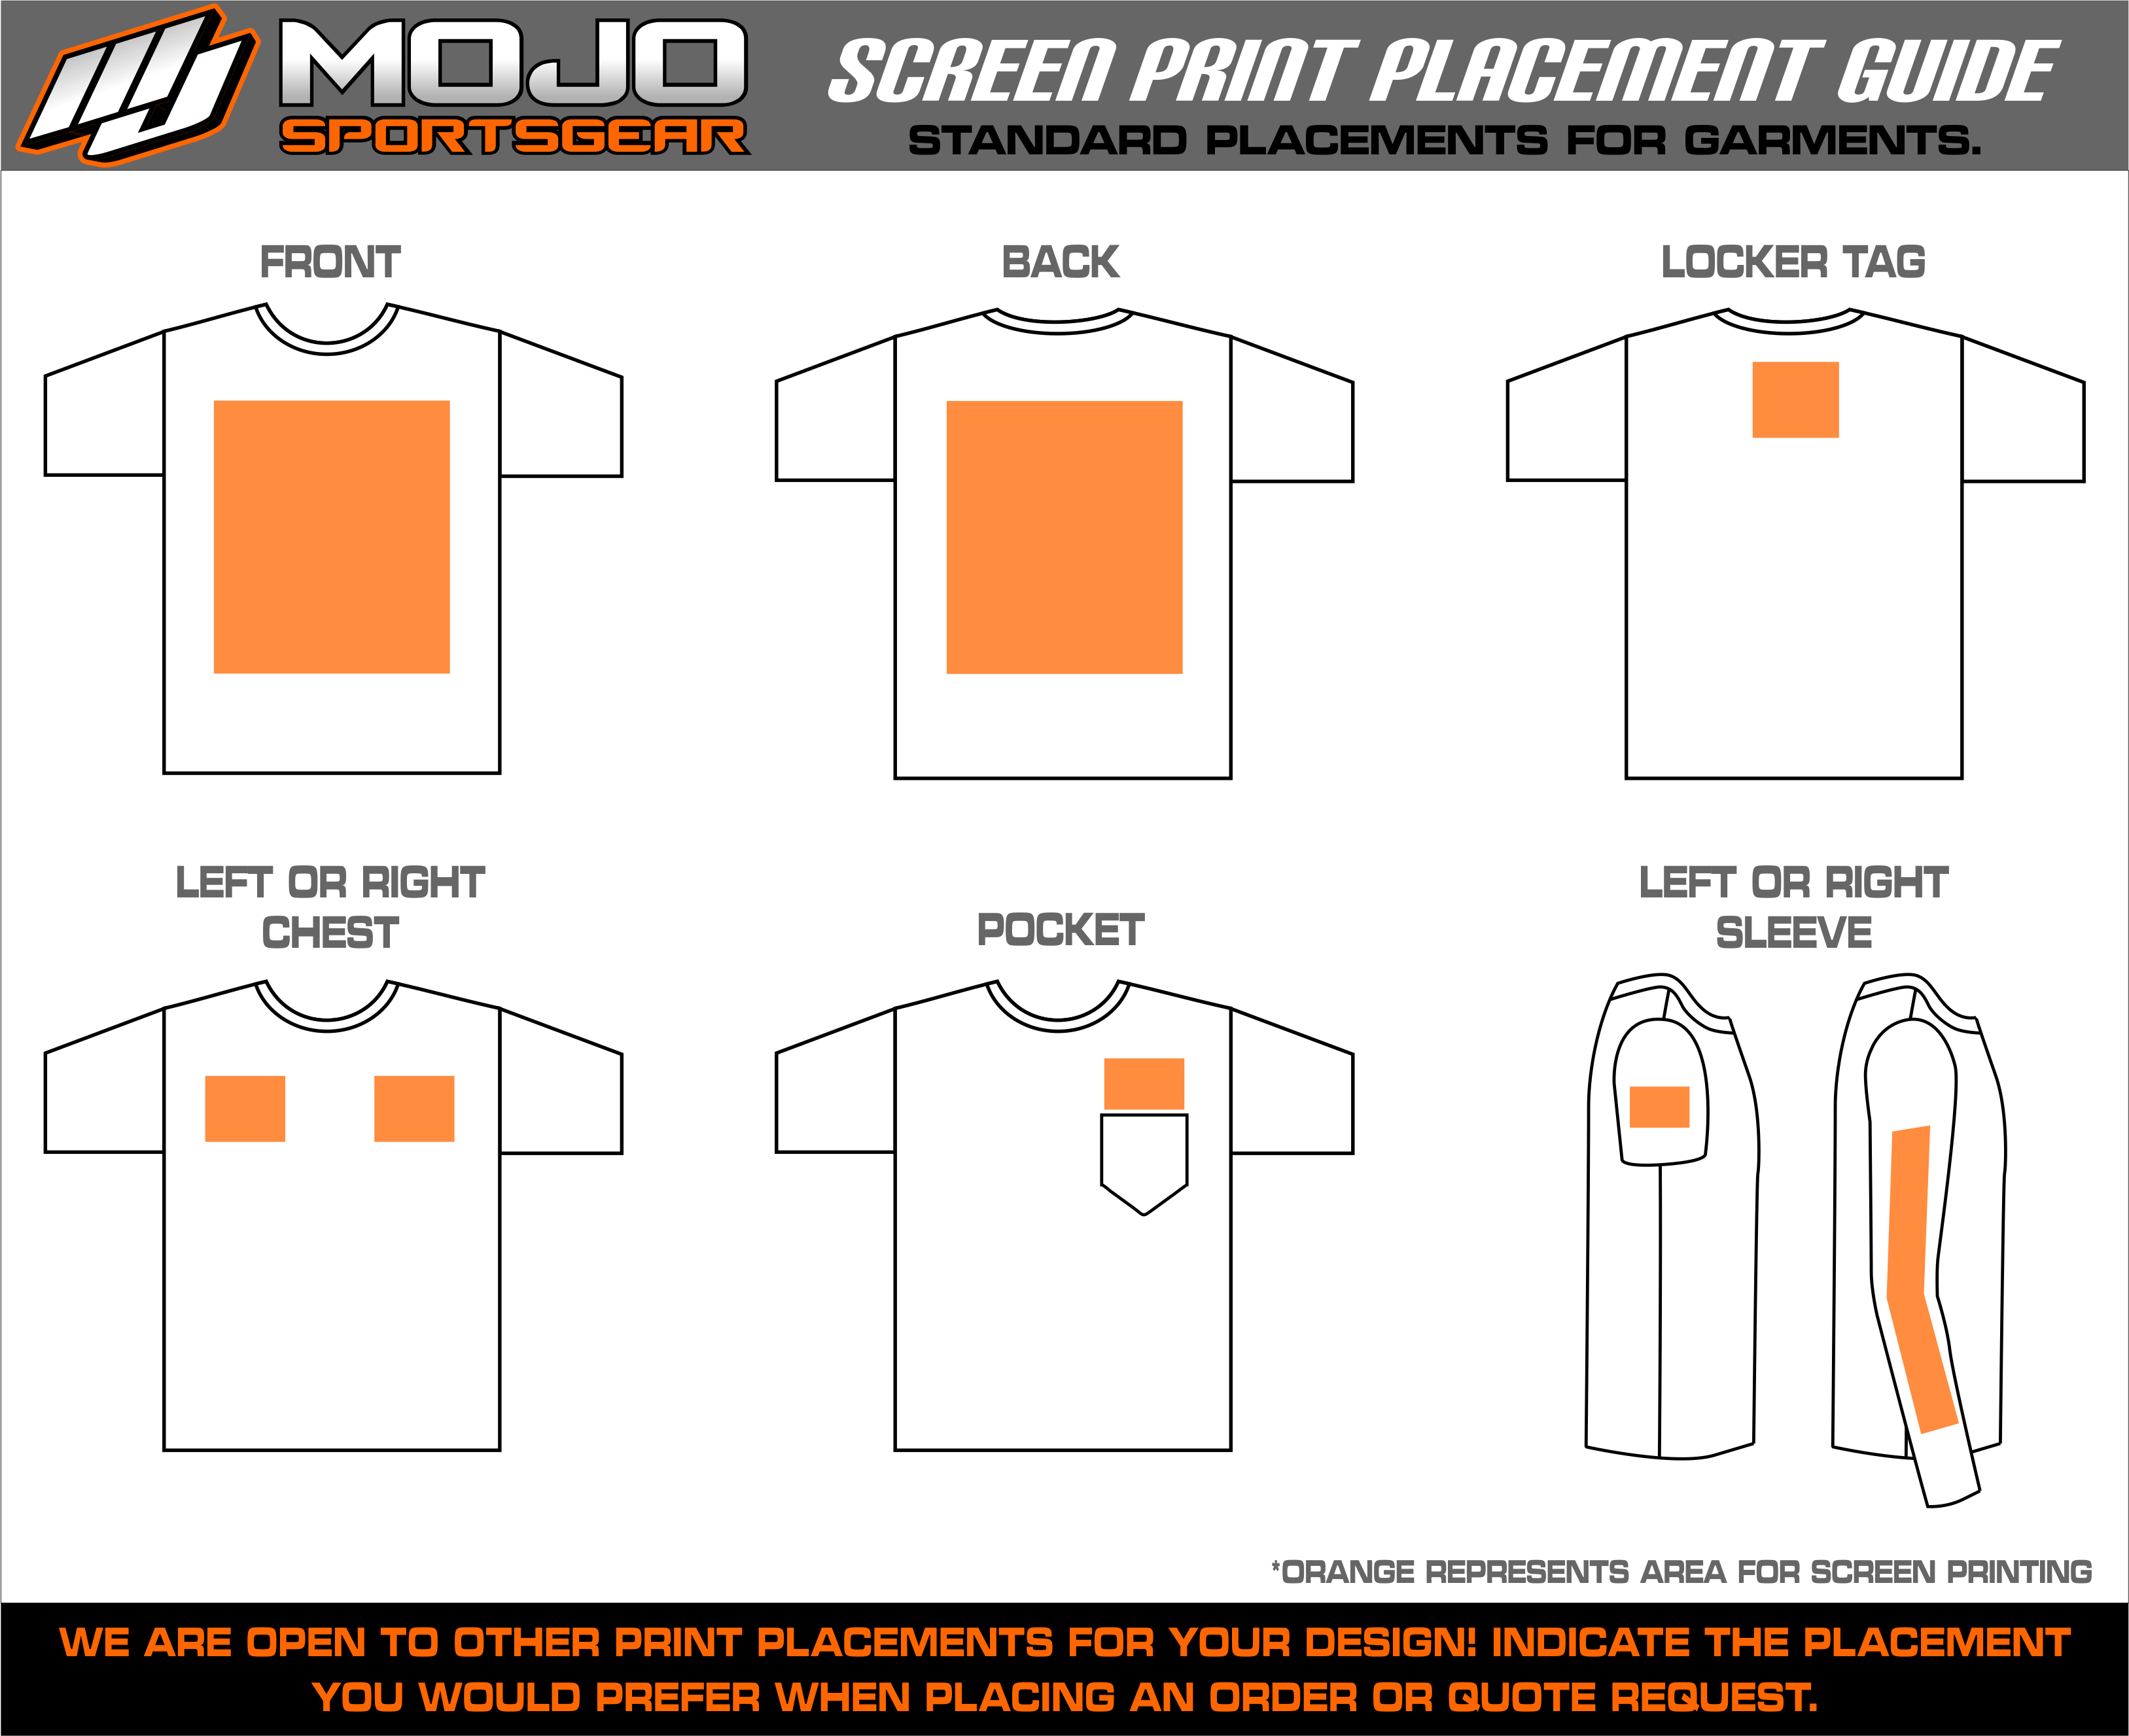 Screen Printing - MOJO Sportsgear